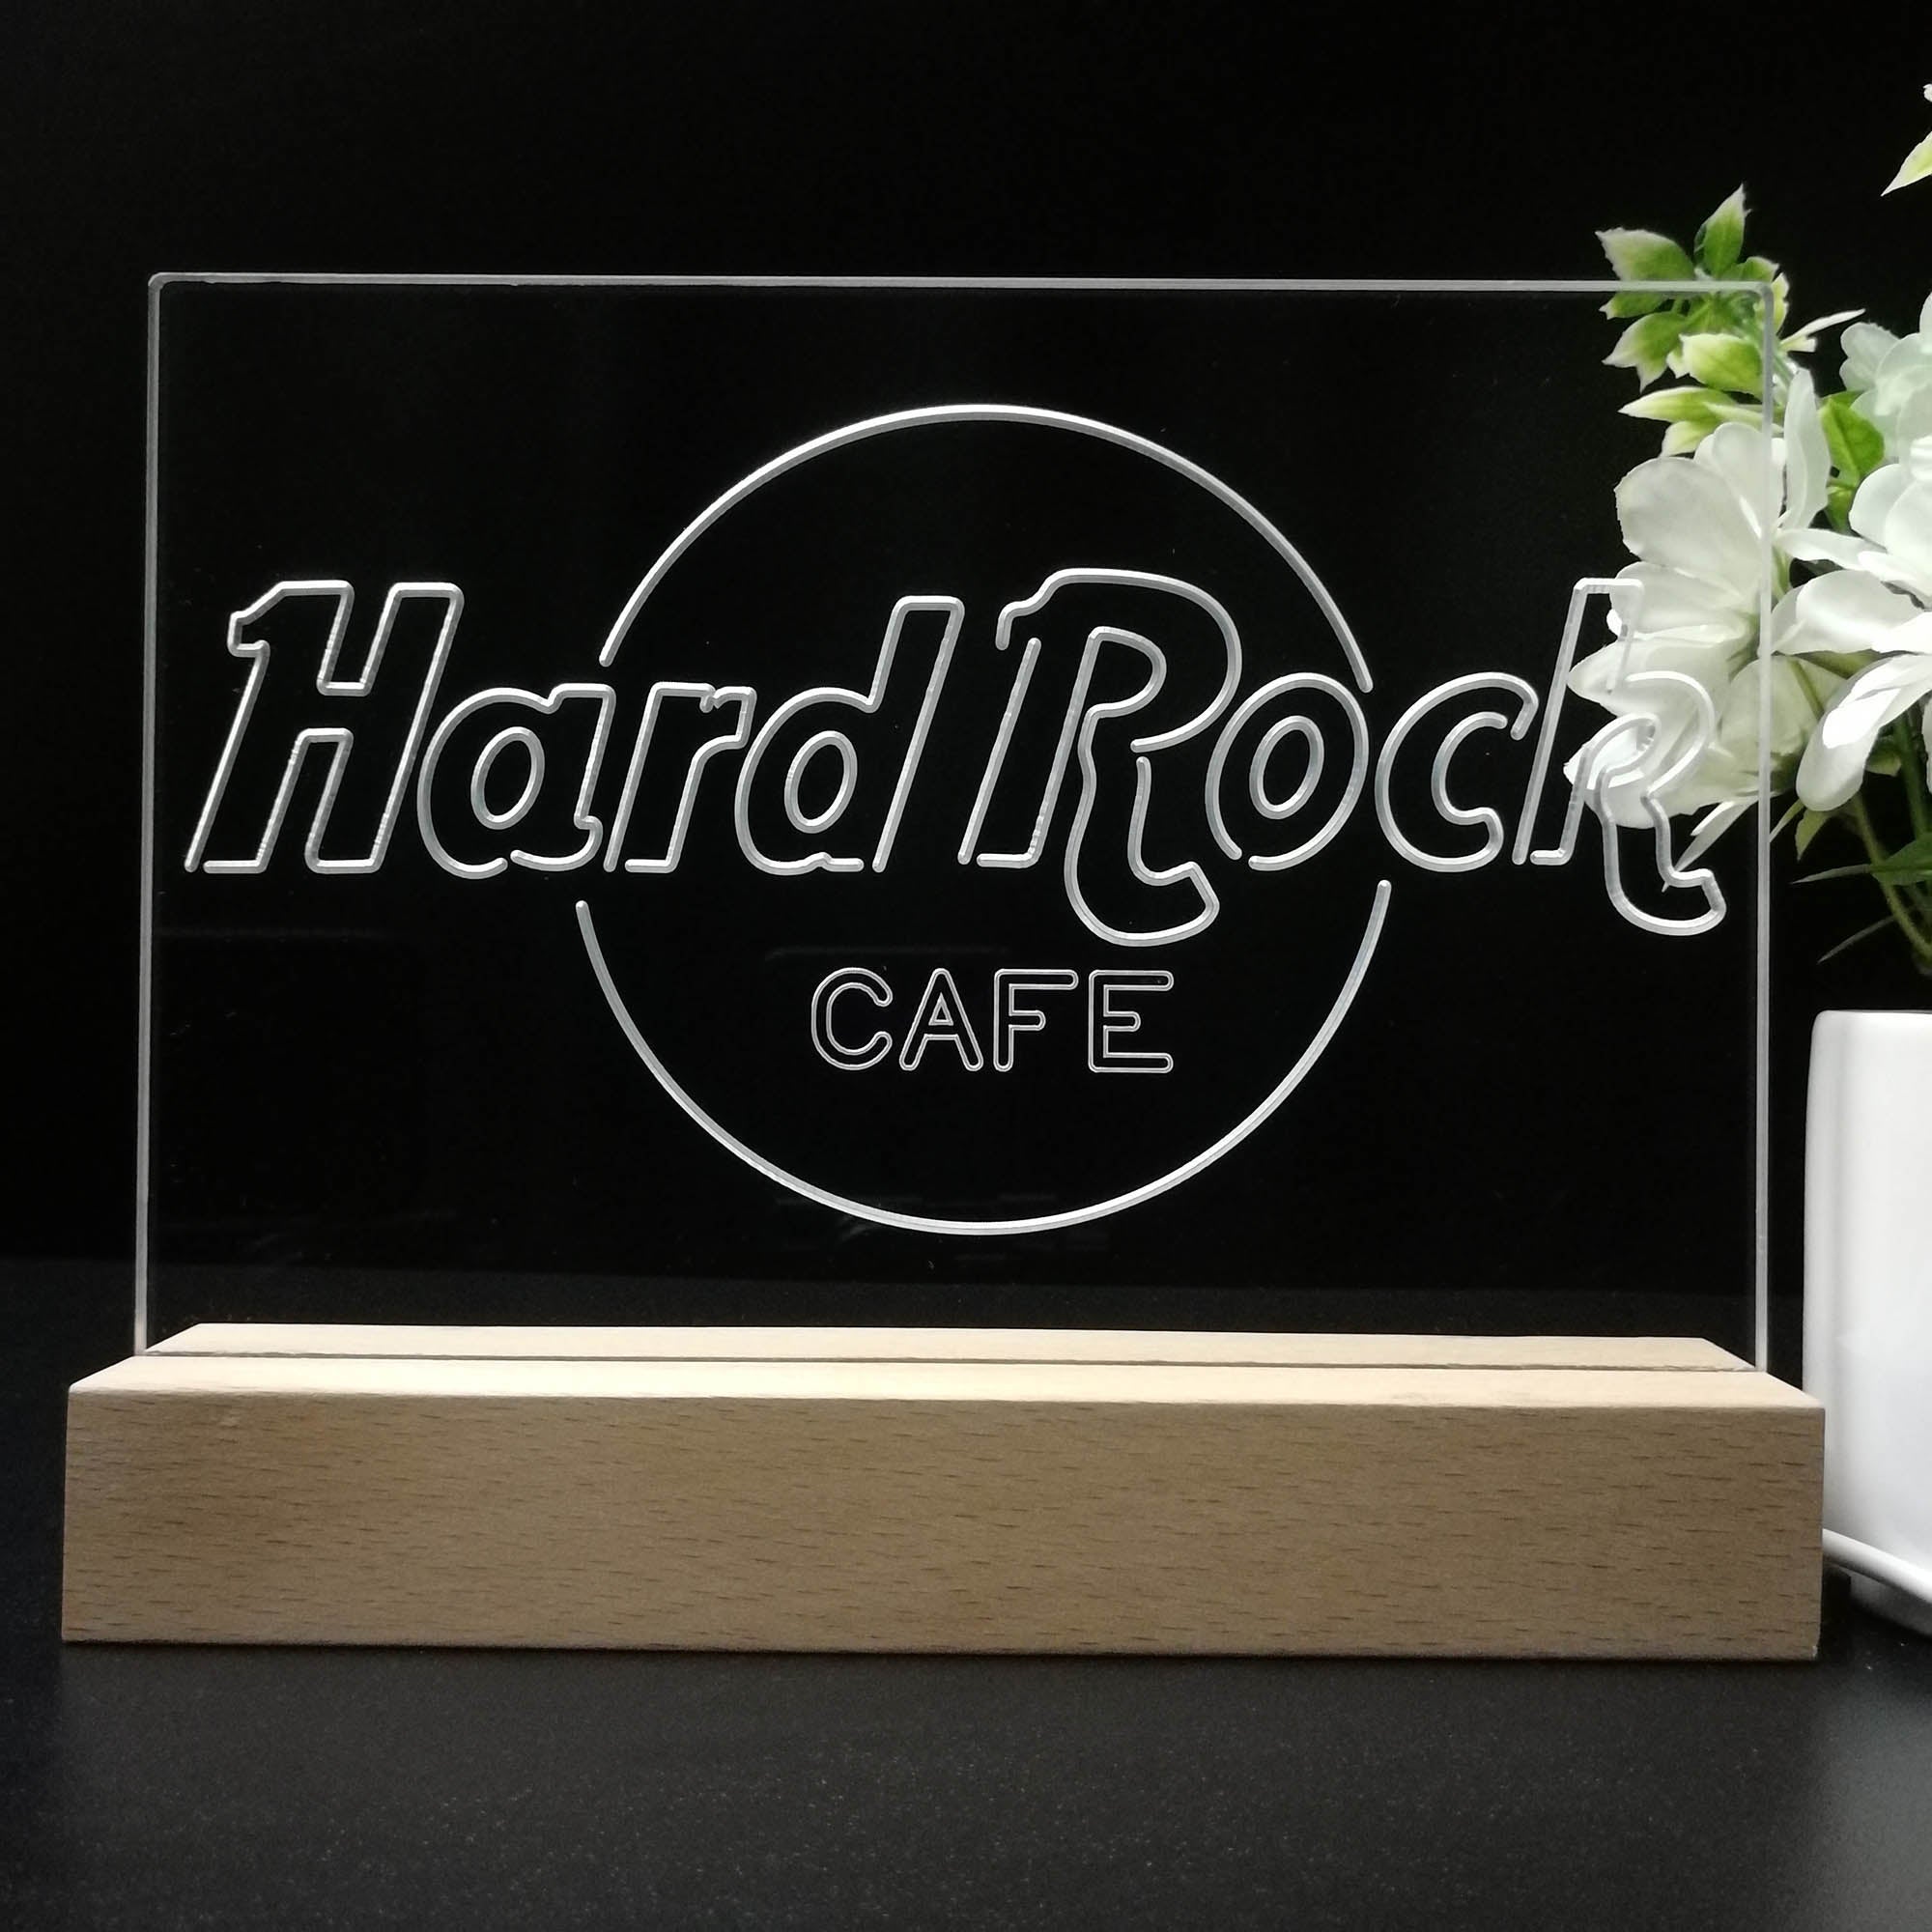 Hard Rock Café Restaurant Neon Sign Pub Bar Lamp